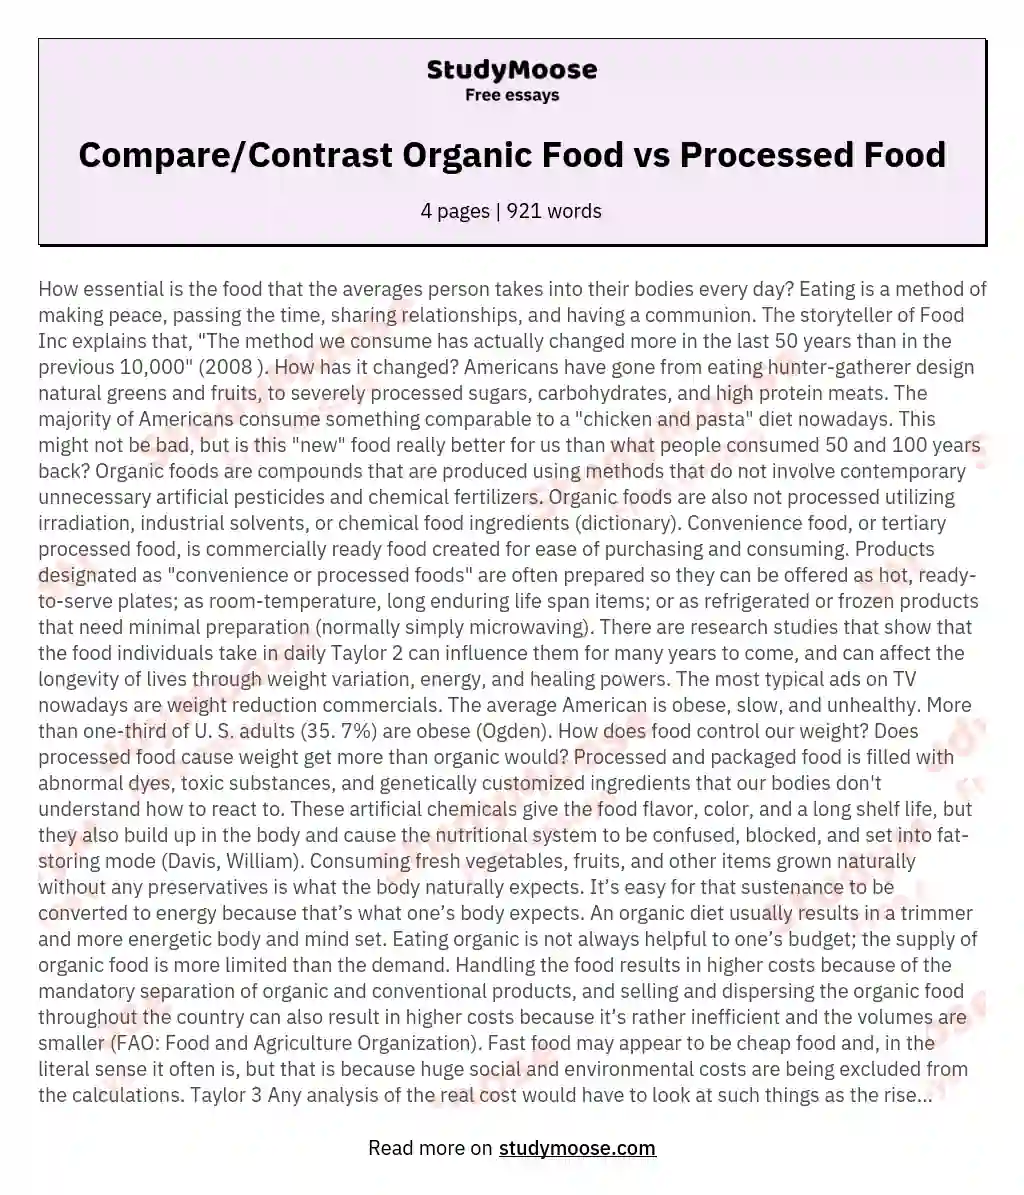 Compare/Contrast Organic Food vs Processed Food